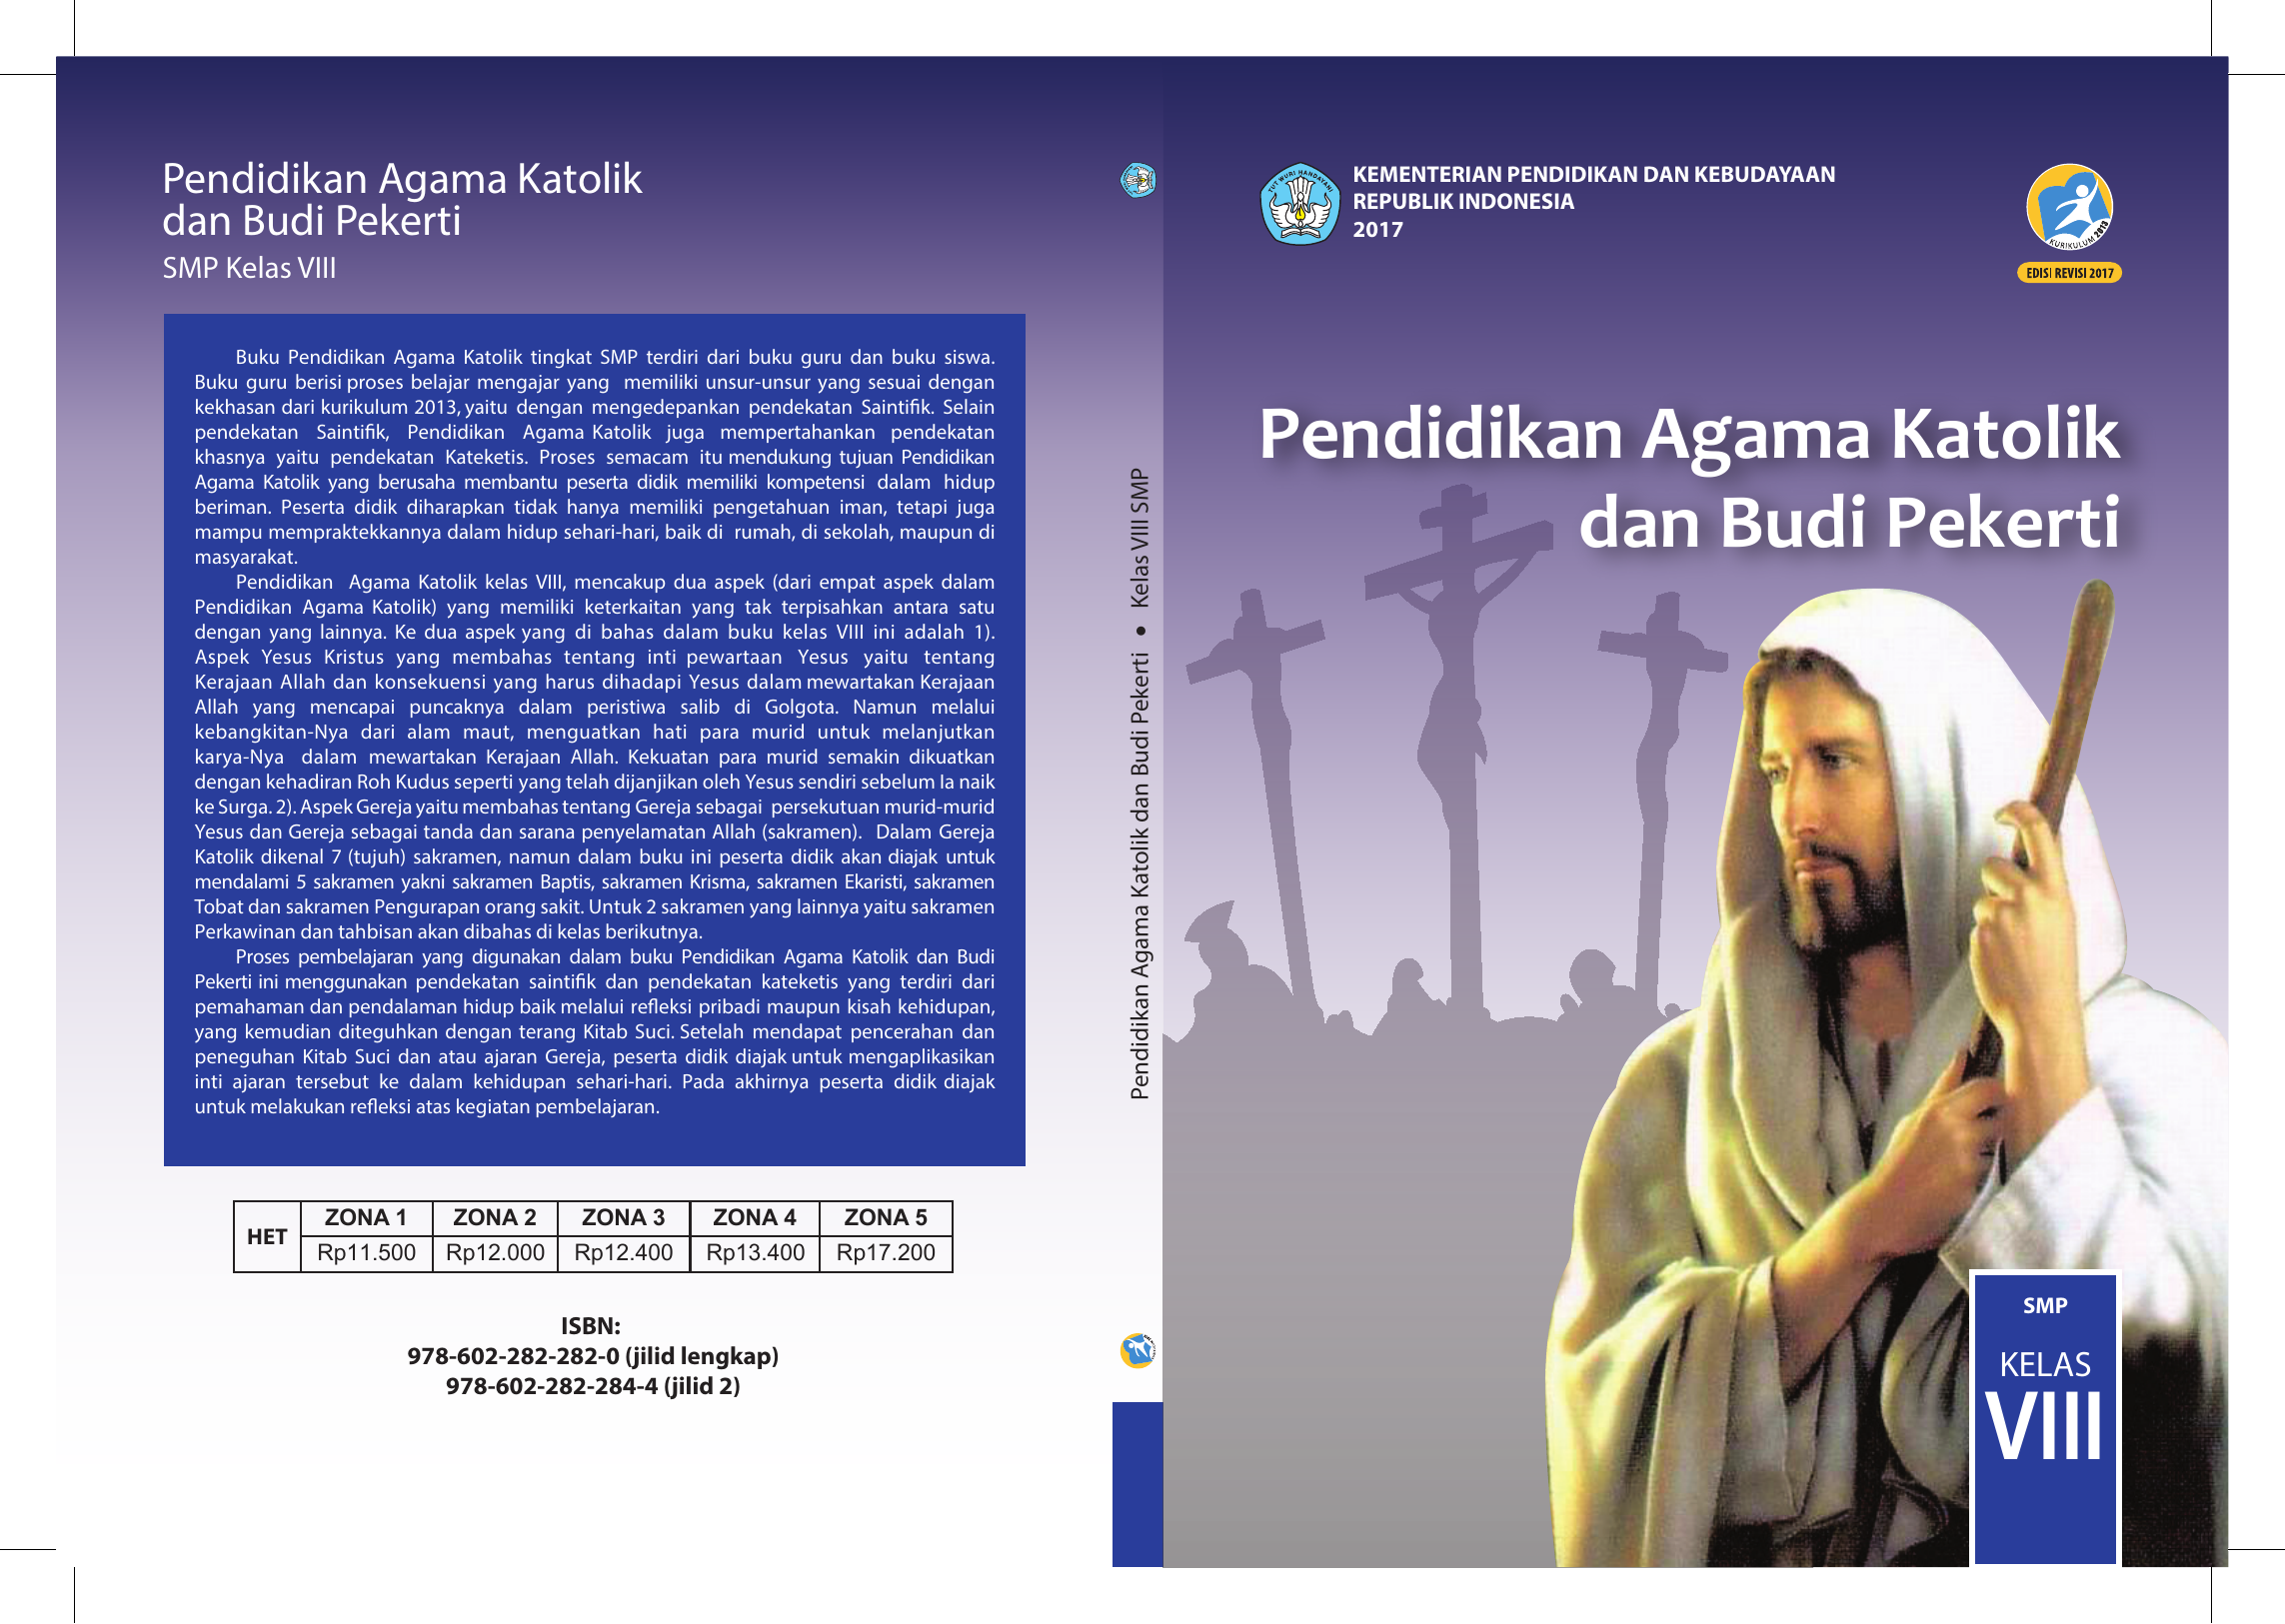 Pendidikan Agama Katolik dan Budi Pekerti KEMENTERIAN PENDIDIKAN DAN KEBUDAYAAN REPUBLIK INDONESIA 2017 Buku Pendidikan Agama Katolik tingkat SMP terdiri